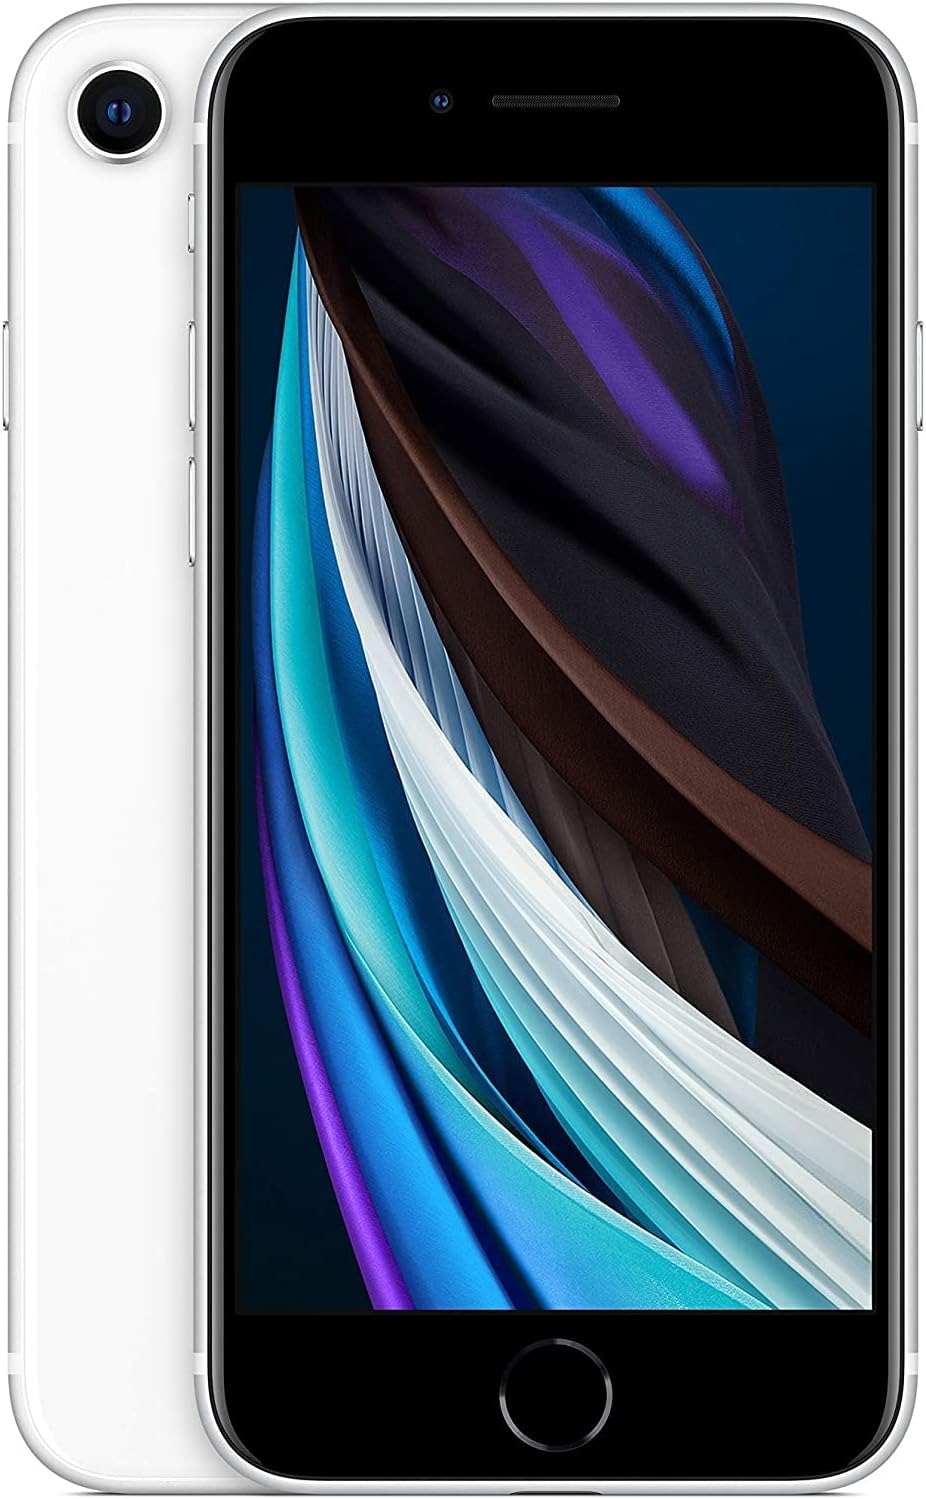 Apple iPhone SE 2nd Gen 64GB (Unlocked) - White (Refurbished)